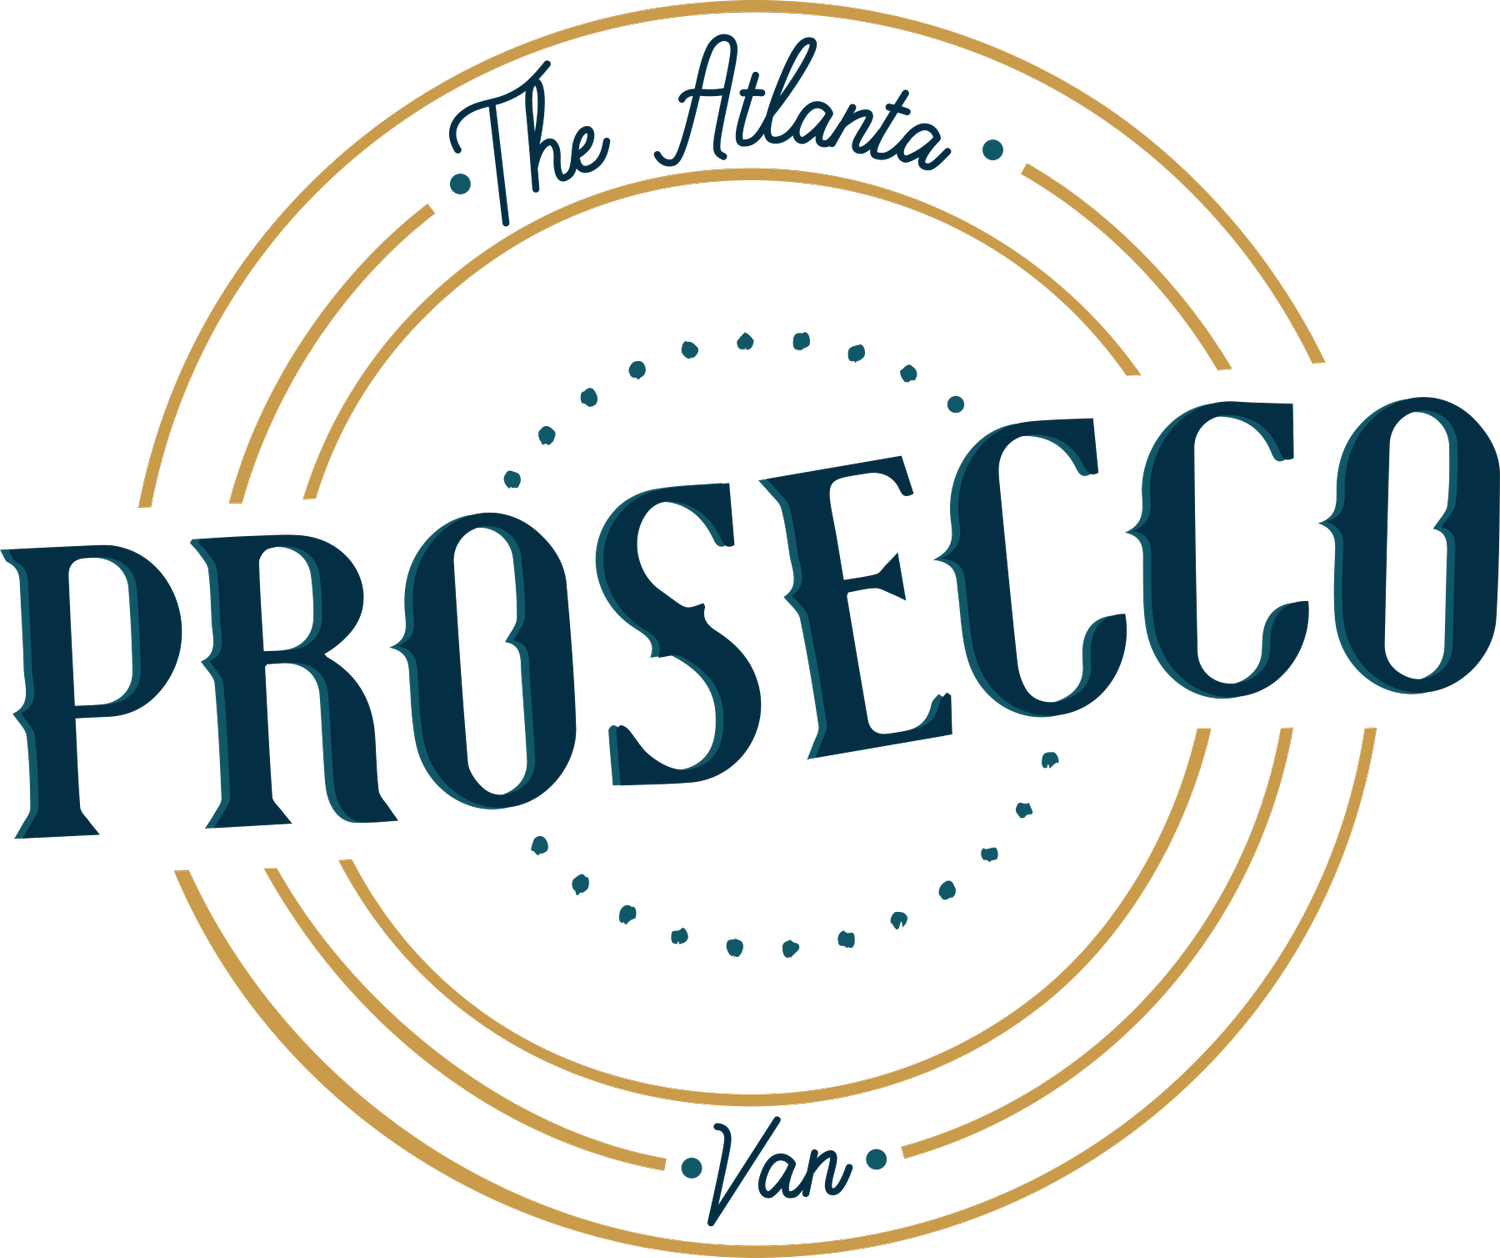 The Atlanta Prosecco Van